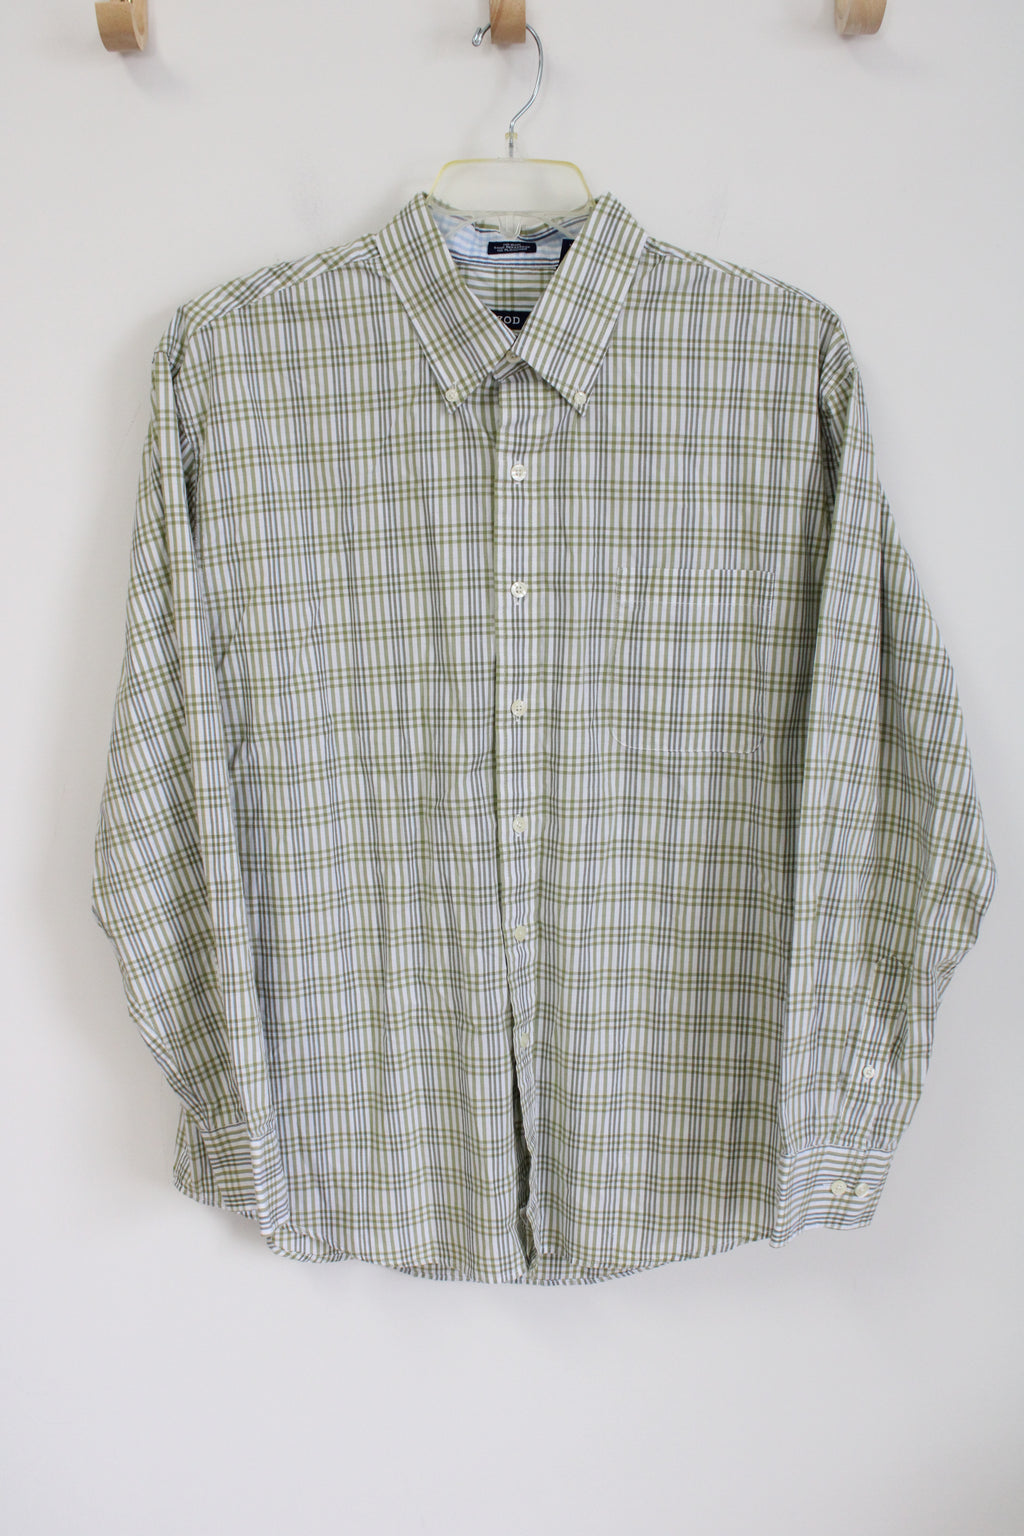 Izod Green Plaid Button Down Shirt | XL